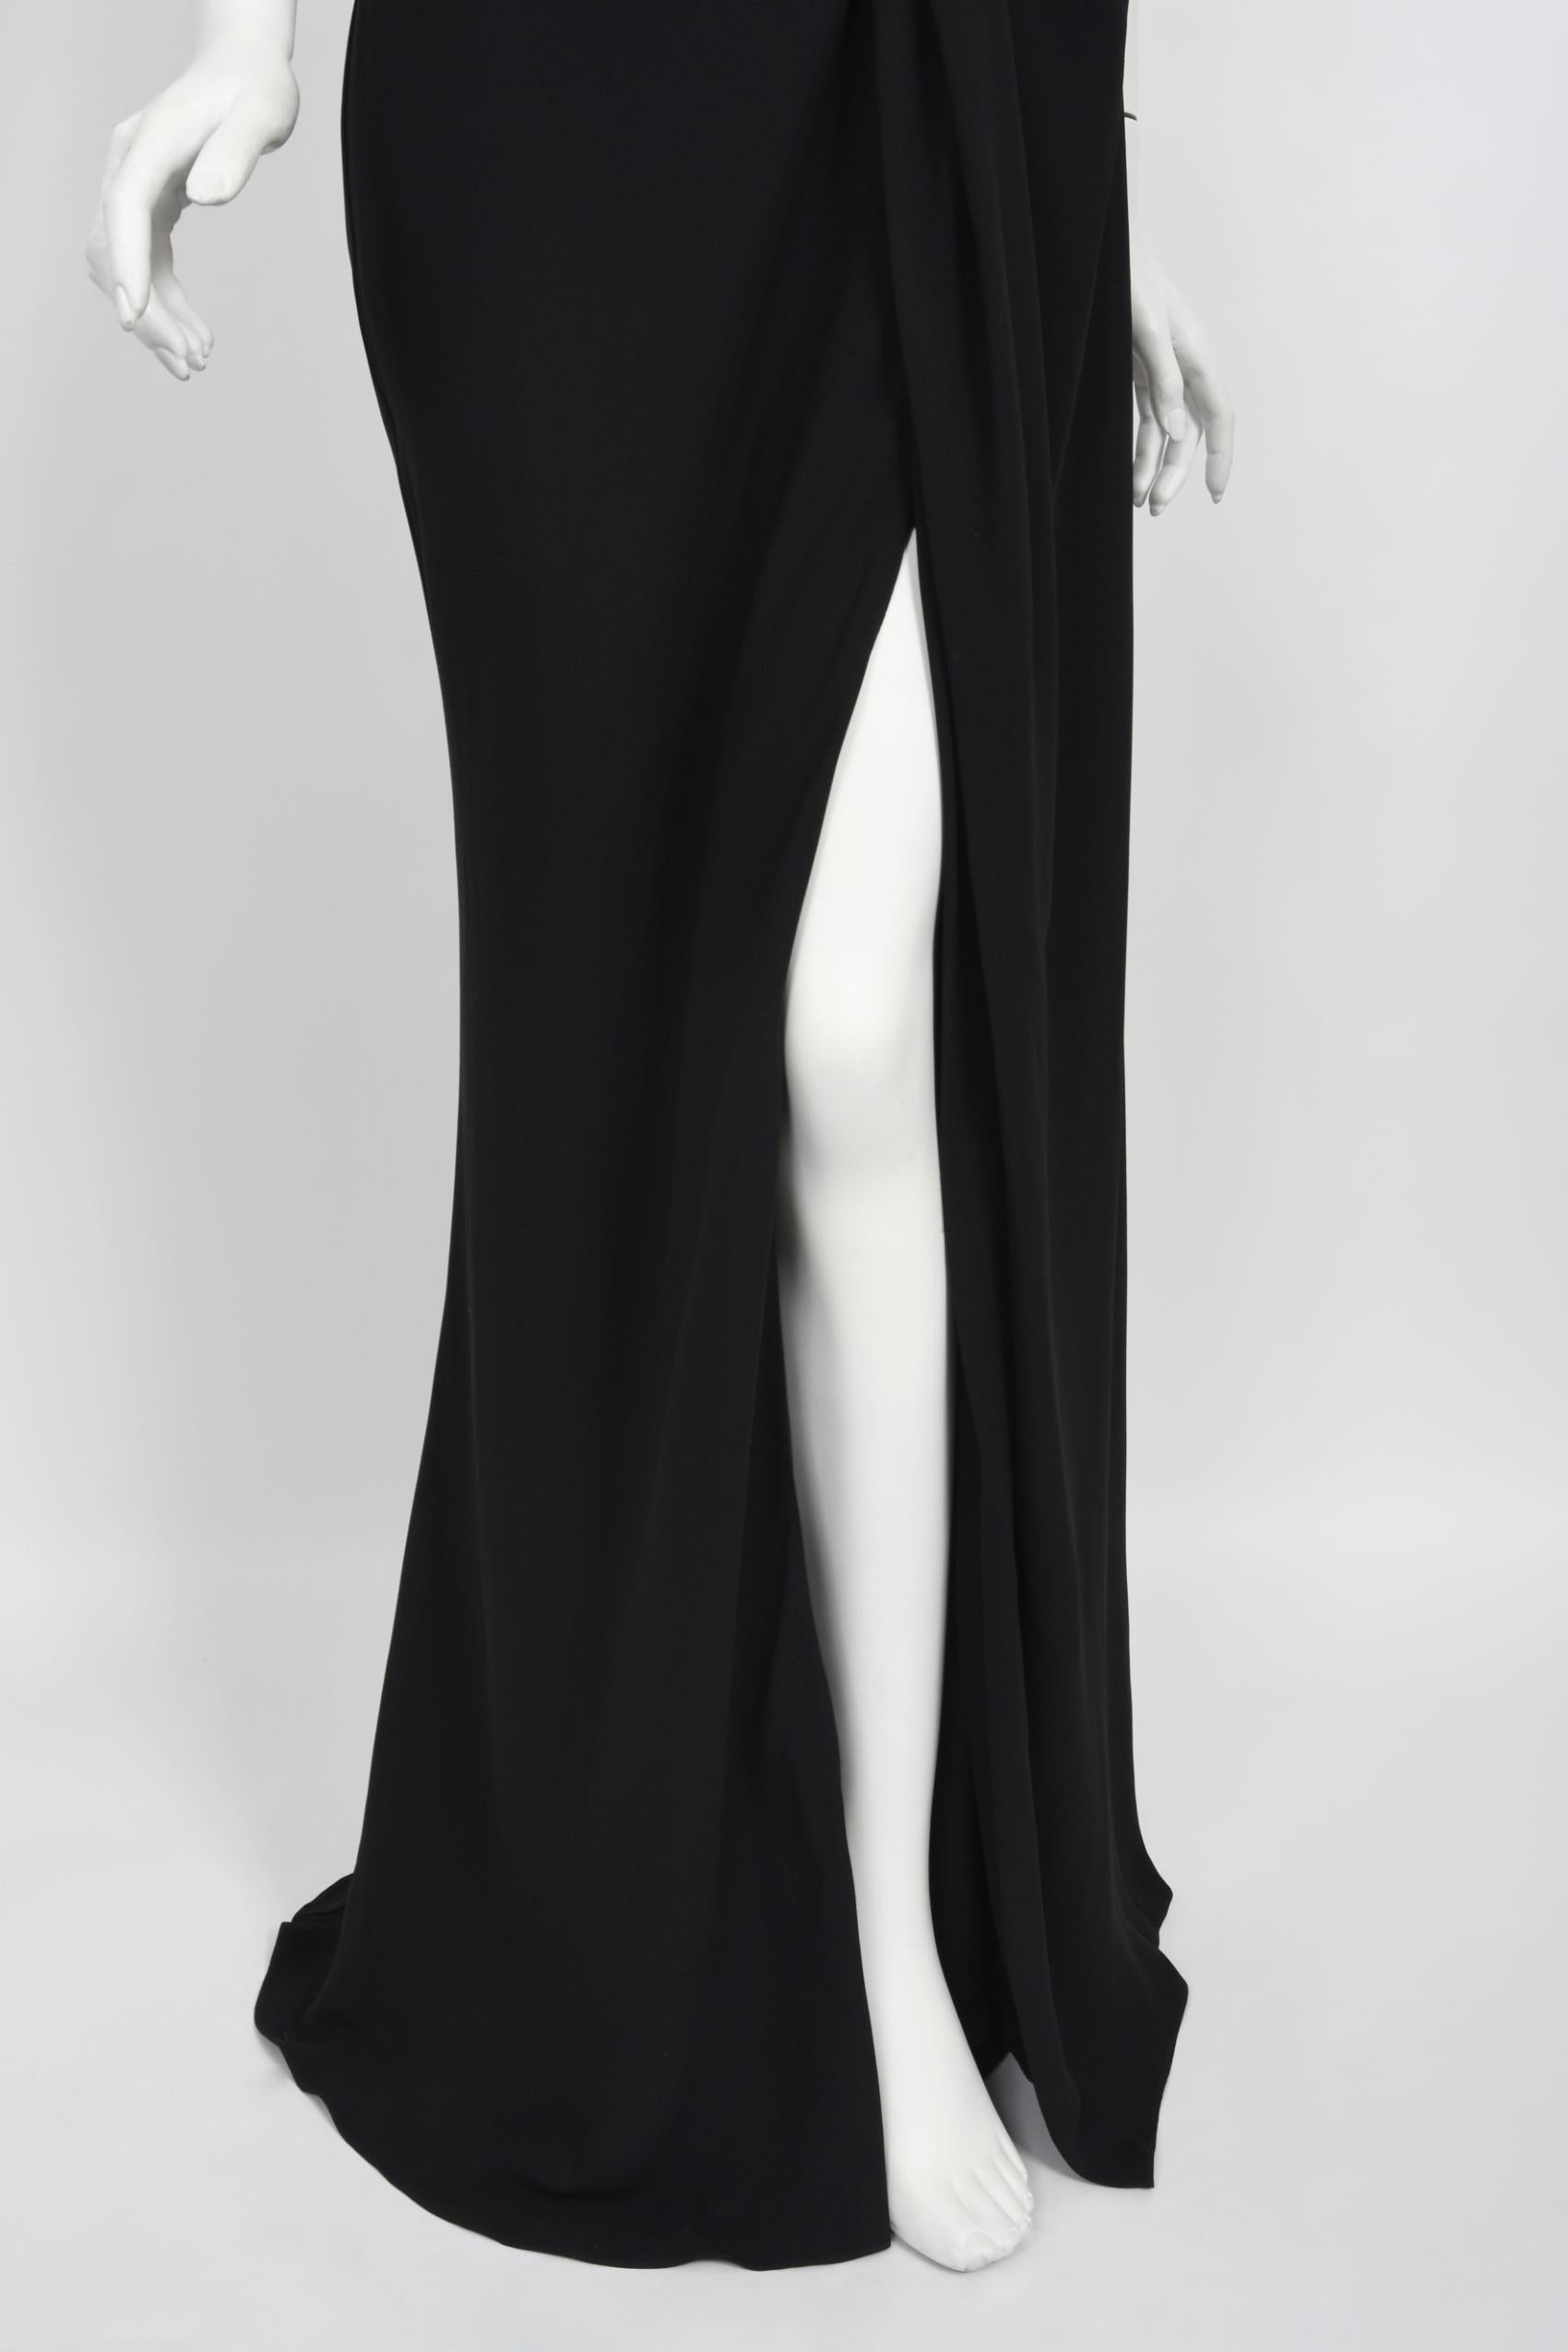 2008 Christian Dior by John Galliano Black Beaded Silk High Slit Bias-Cut Gown For Sale 8